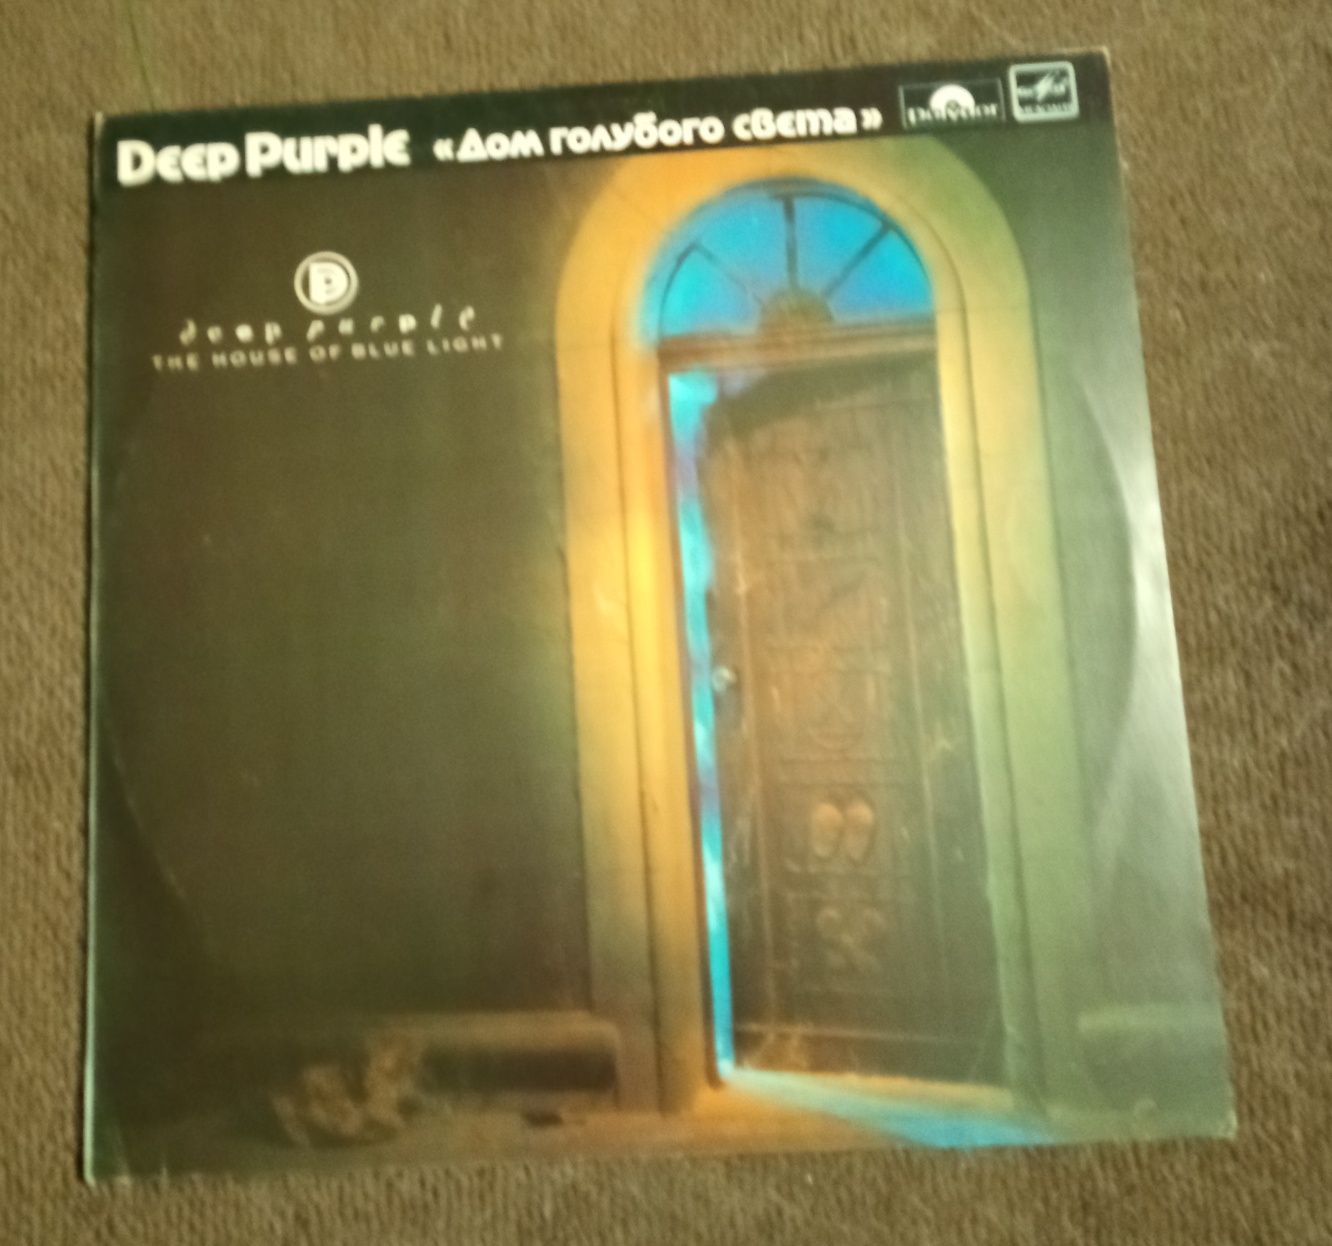 Deep Purple, Paul McCartney, vinil de qualidade